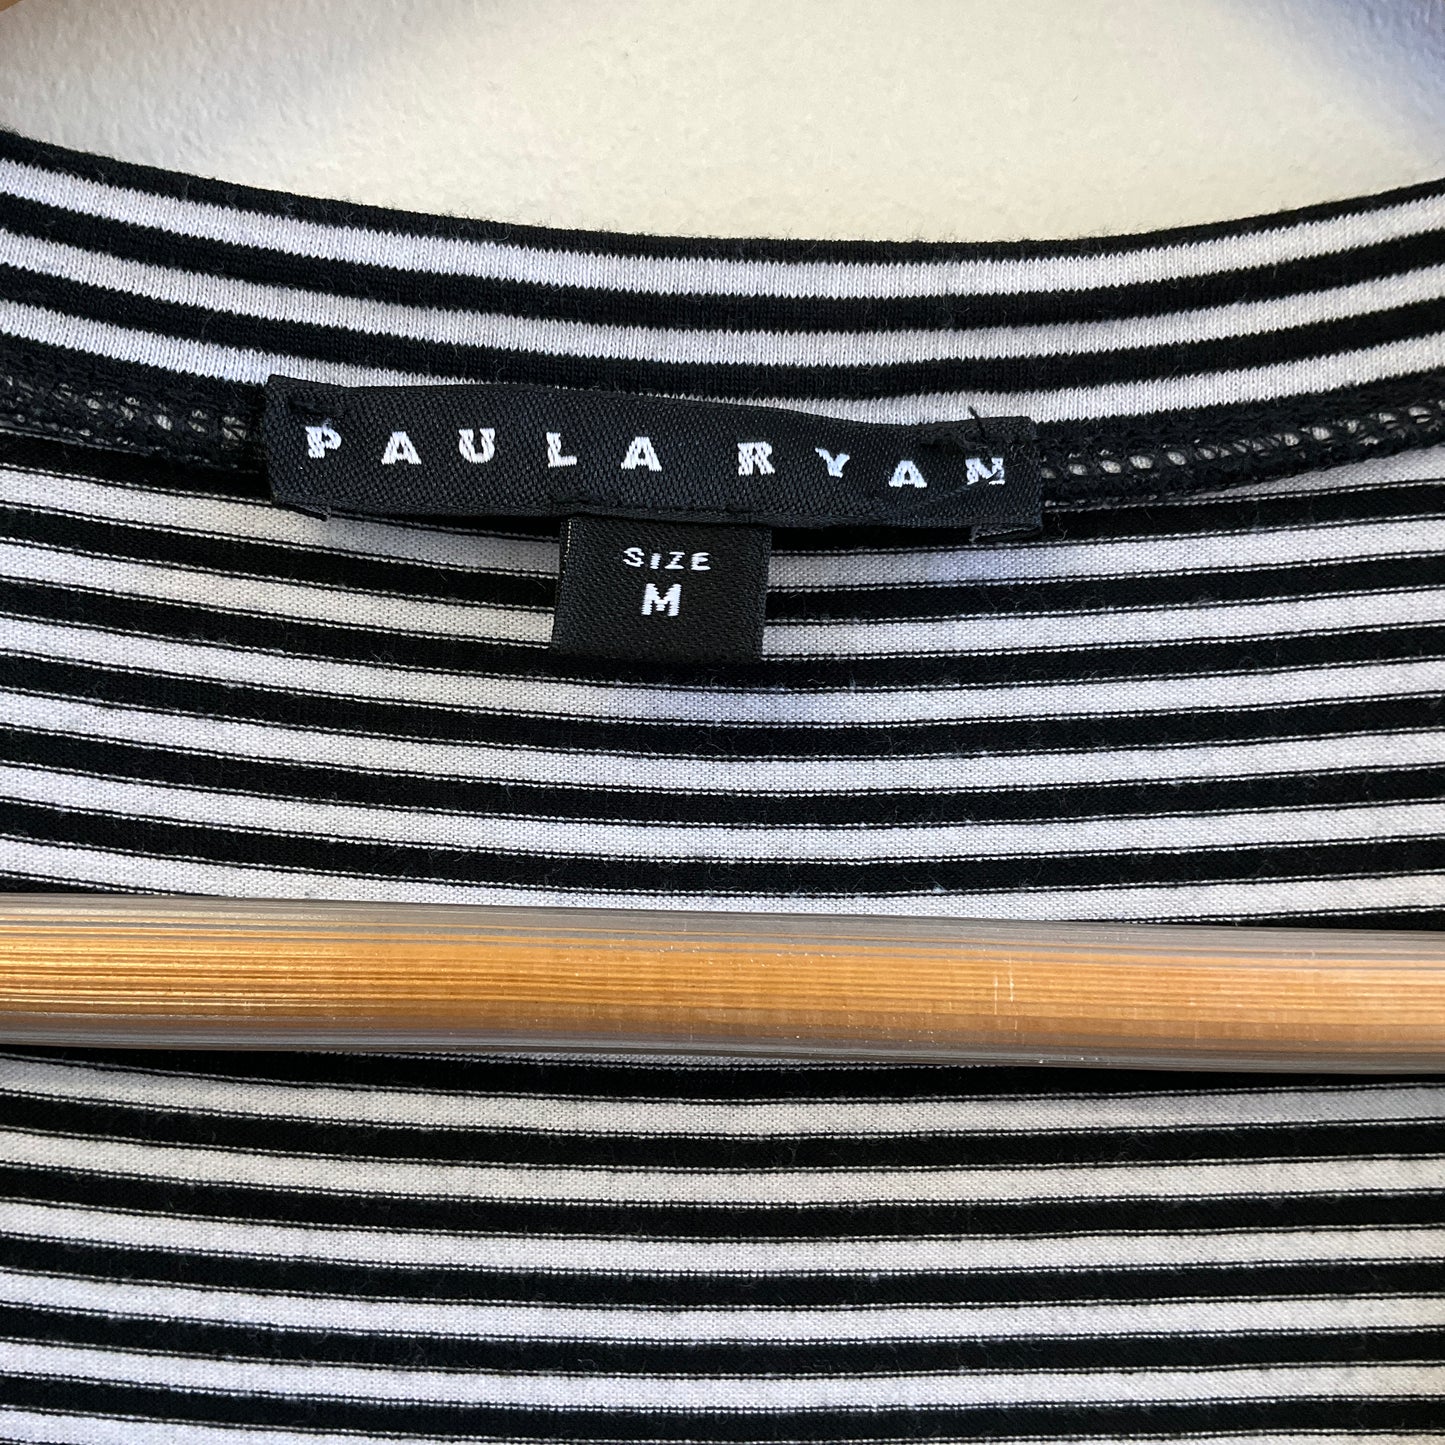 Paula Ryan - Striped Top